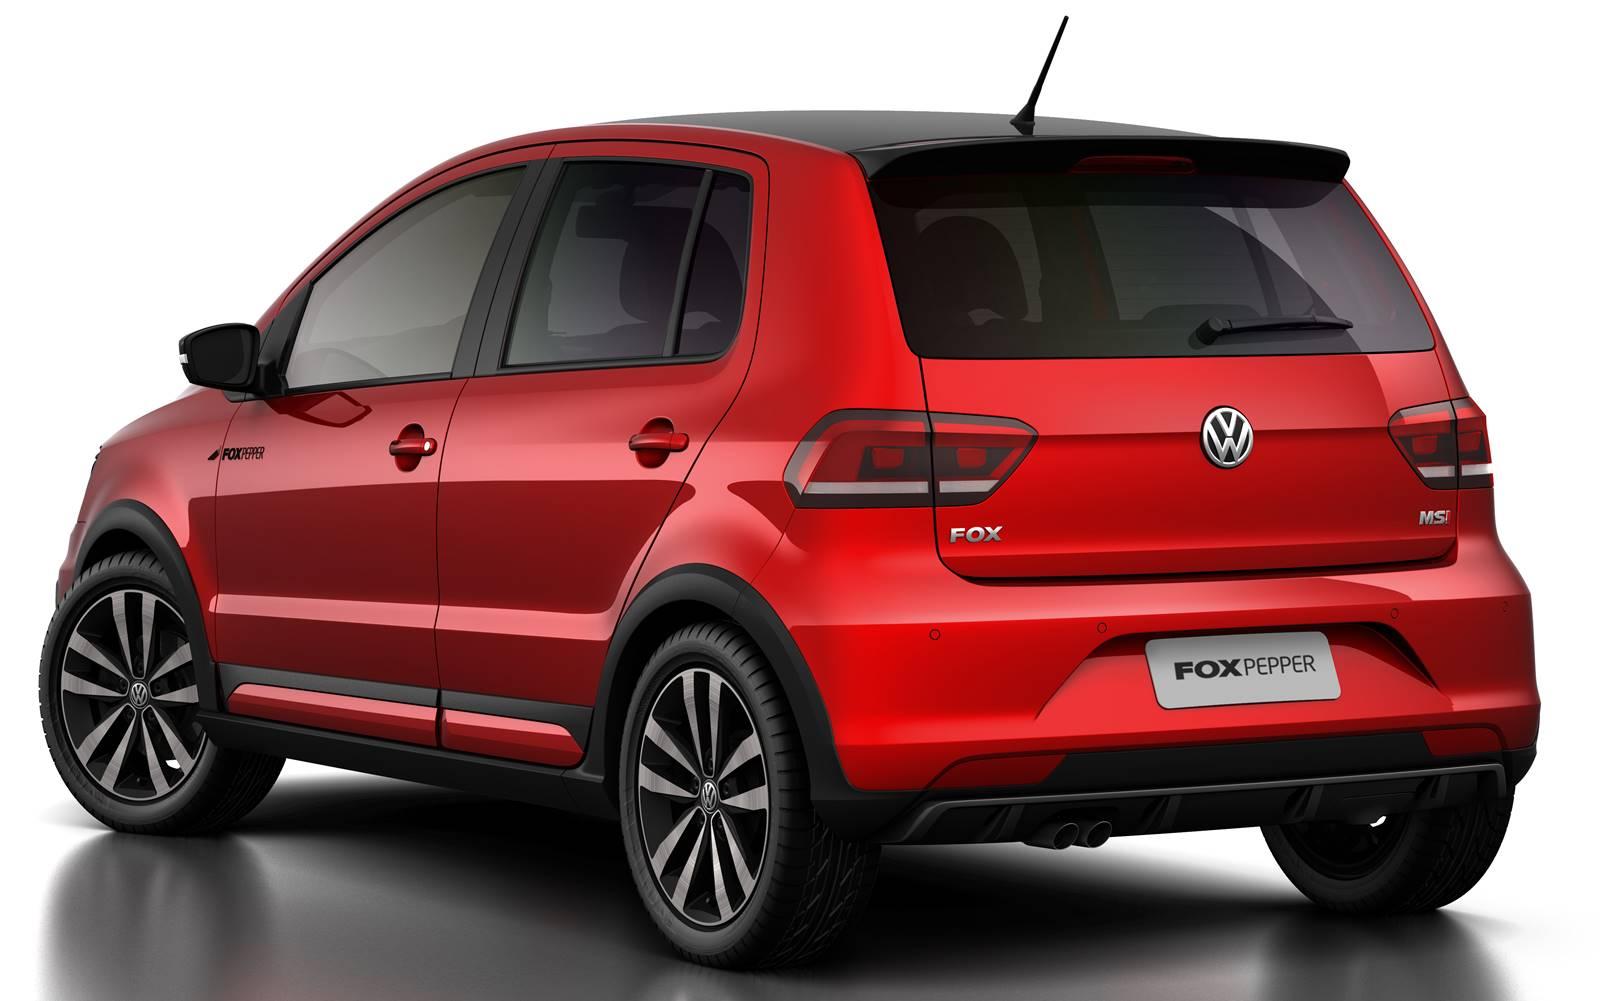 https://img.indianautosblog.com/2014/10/VW-Fox-Pepper-concept-rear-press-shots.jpg